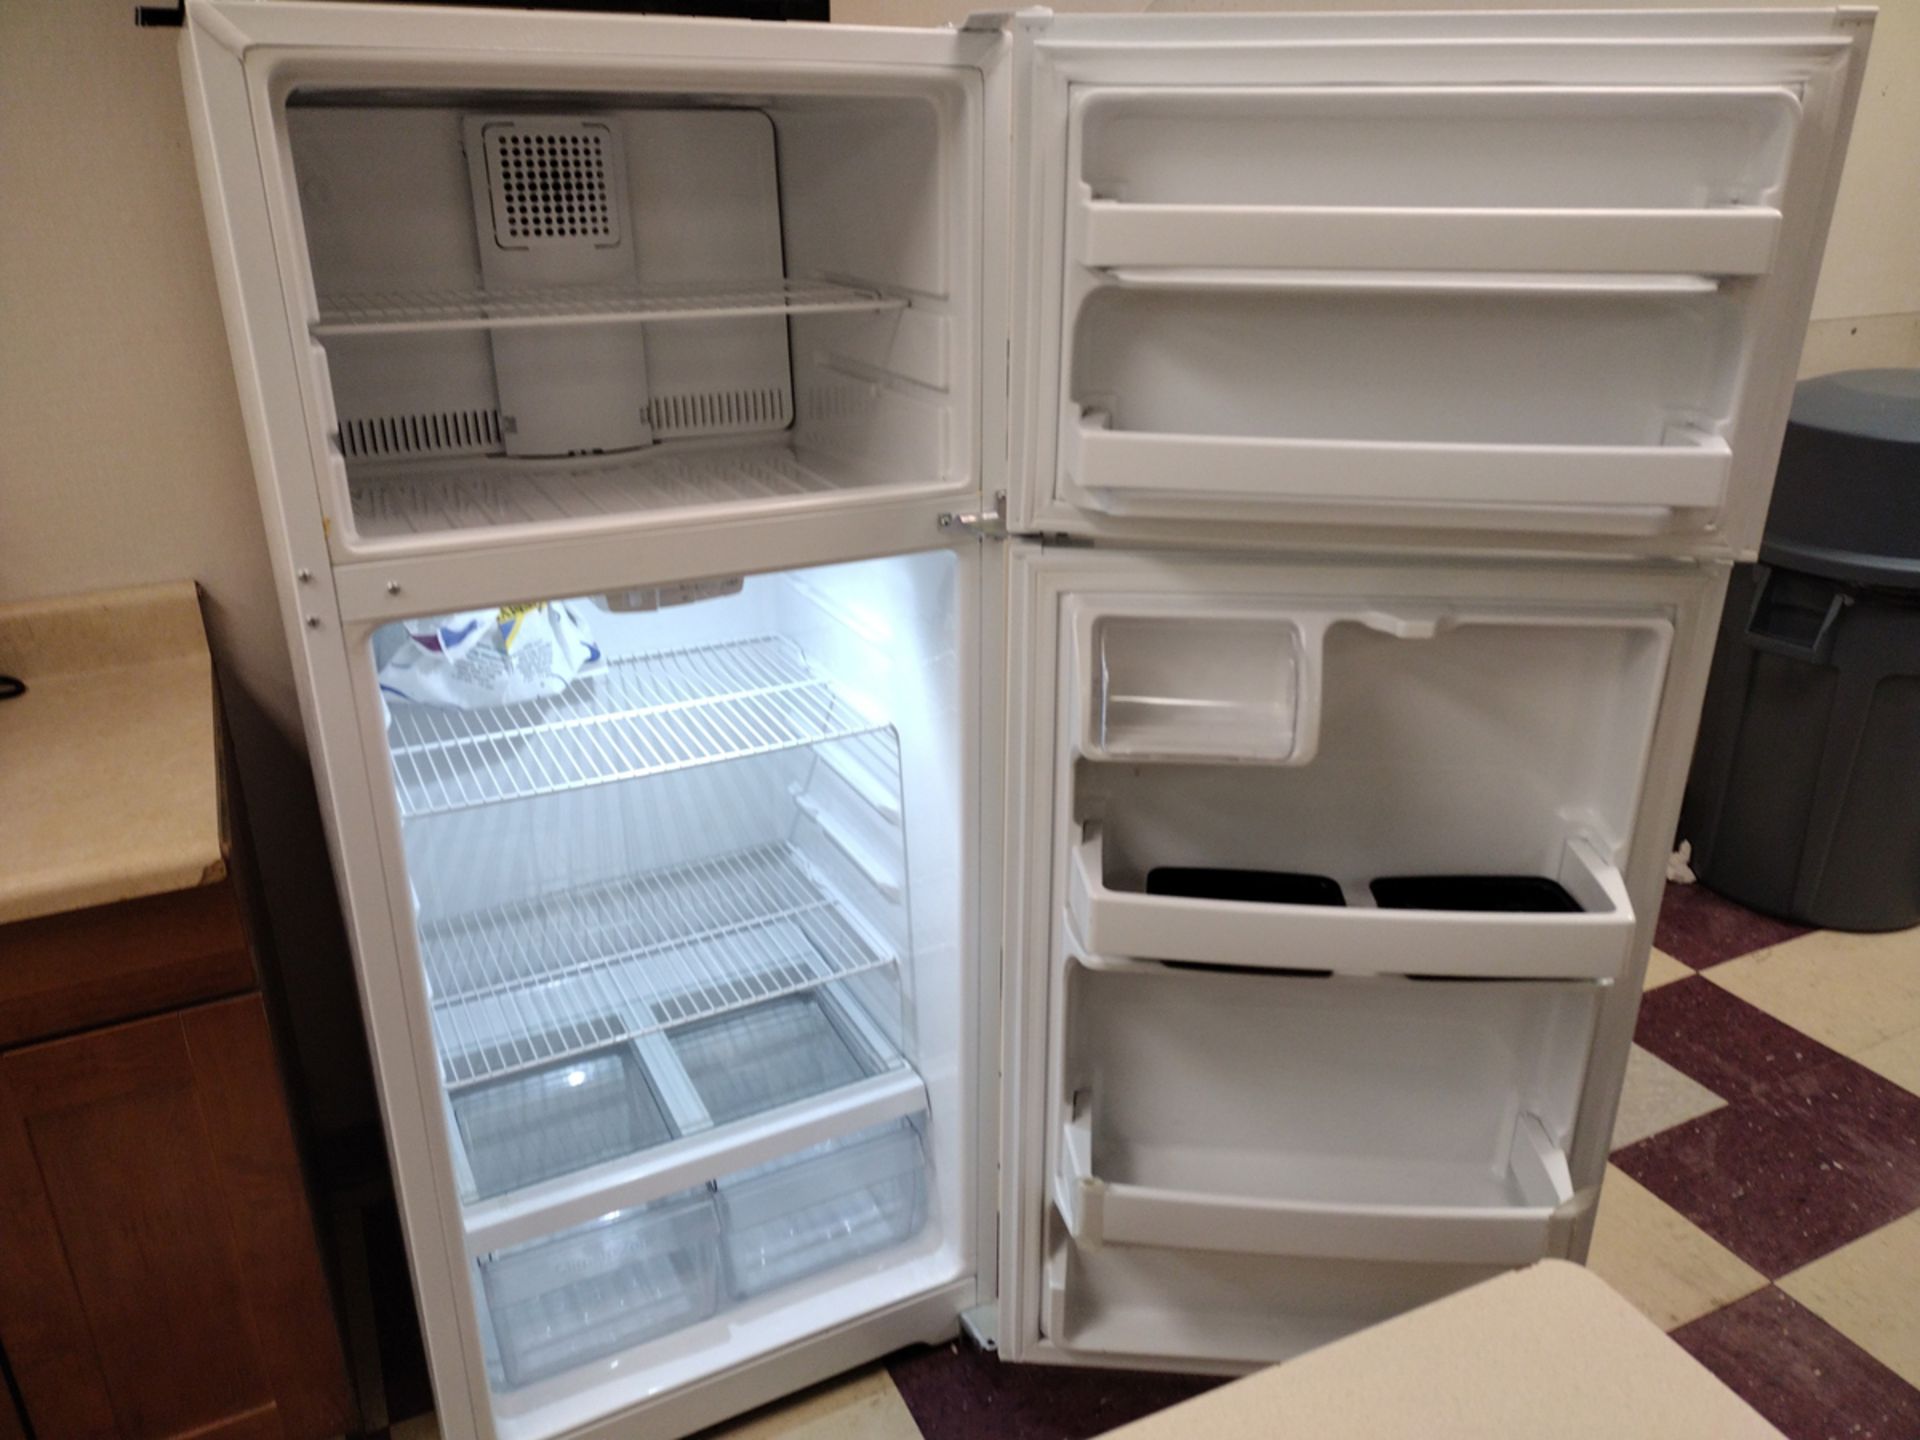 {Each} Top Freezer Refrigerator - Image 4 of 6